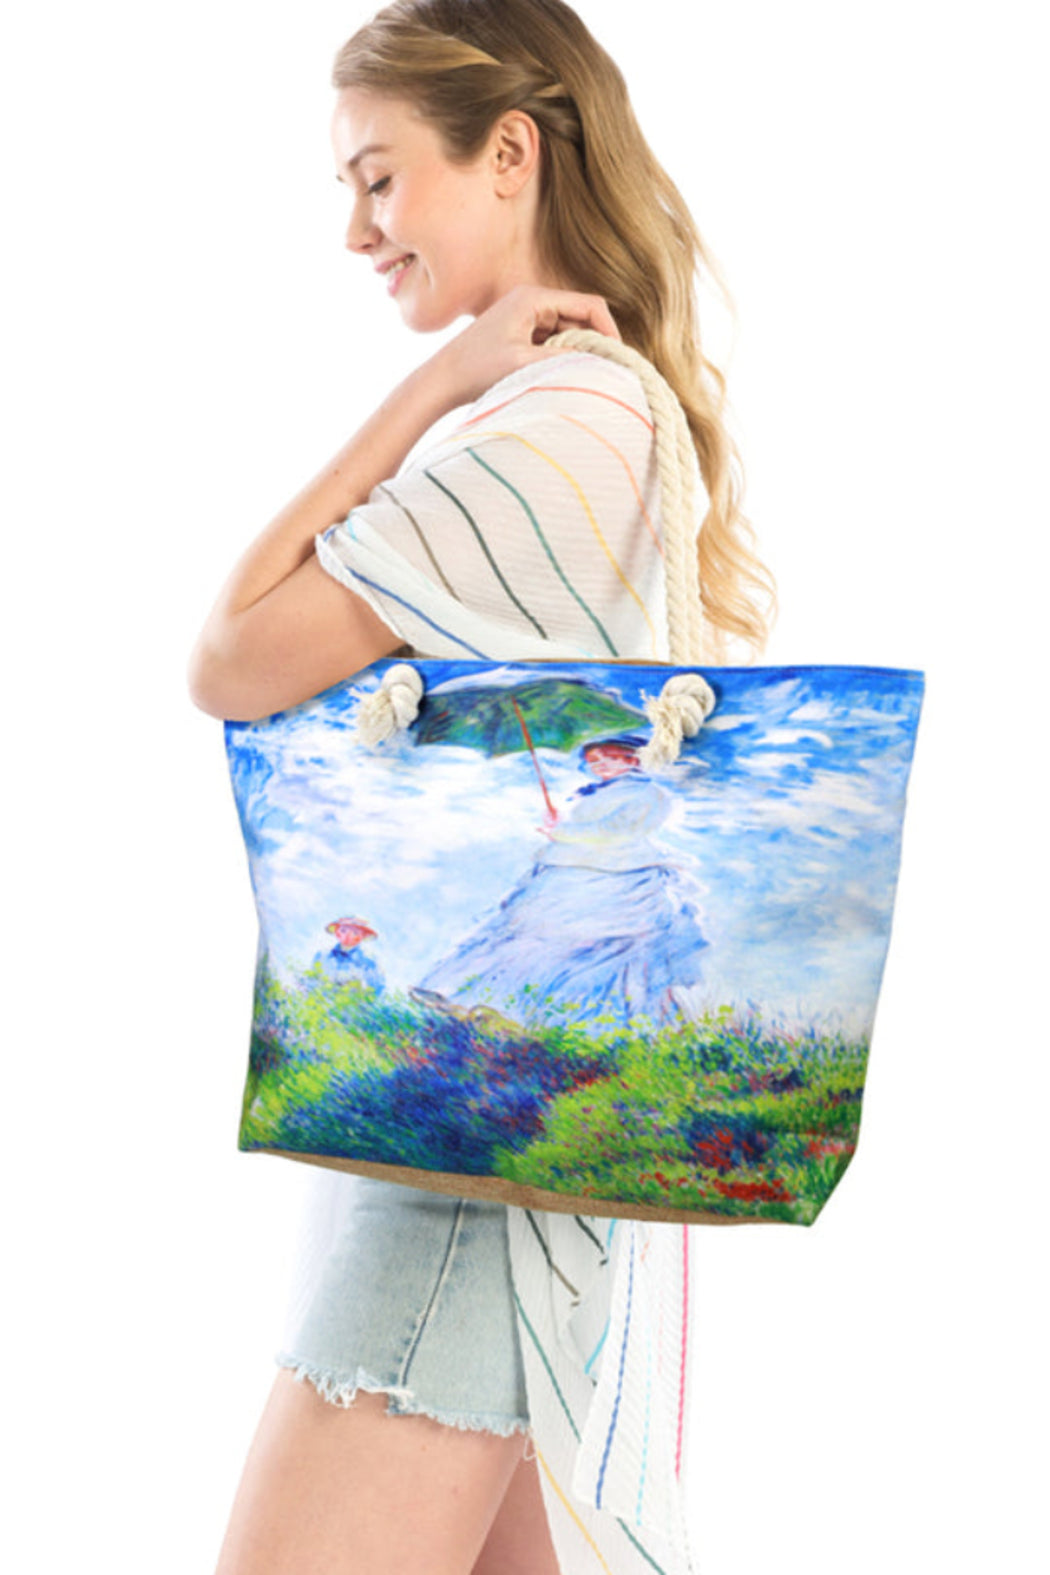 Tote Bag - Woman with a Parasol - Claude Monet